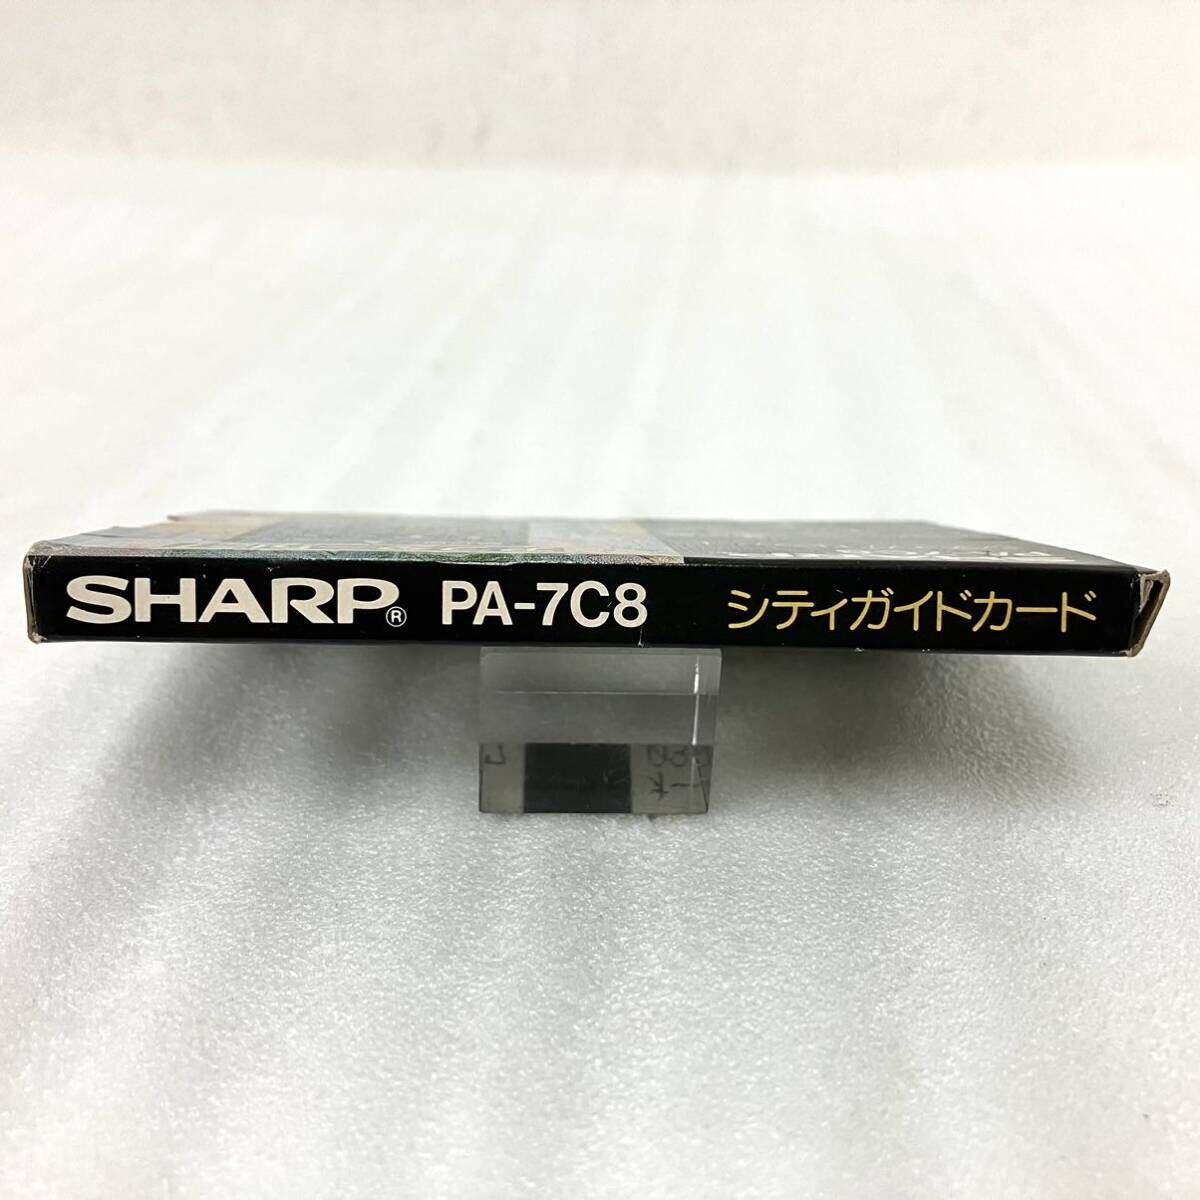  rare unused beautiful goods si Tiga ido card PA-7C8 Tokyo compilation SHARP sharp electron personal organiser PA-7000 exclusive use Showa era Heisei era retro consumer electronics after 5.!